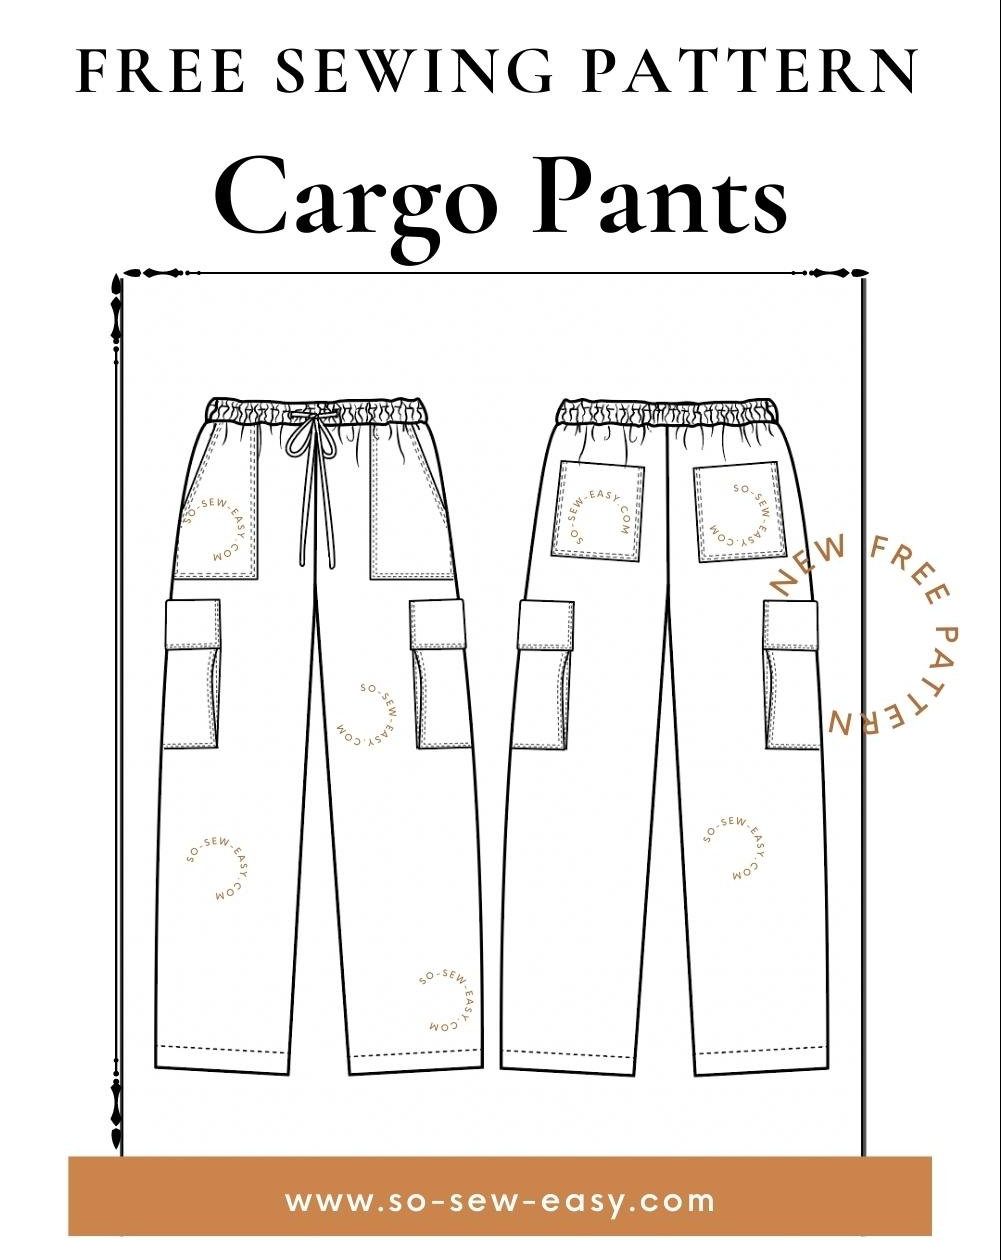 American Stitch Black Cargo Pants